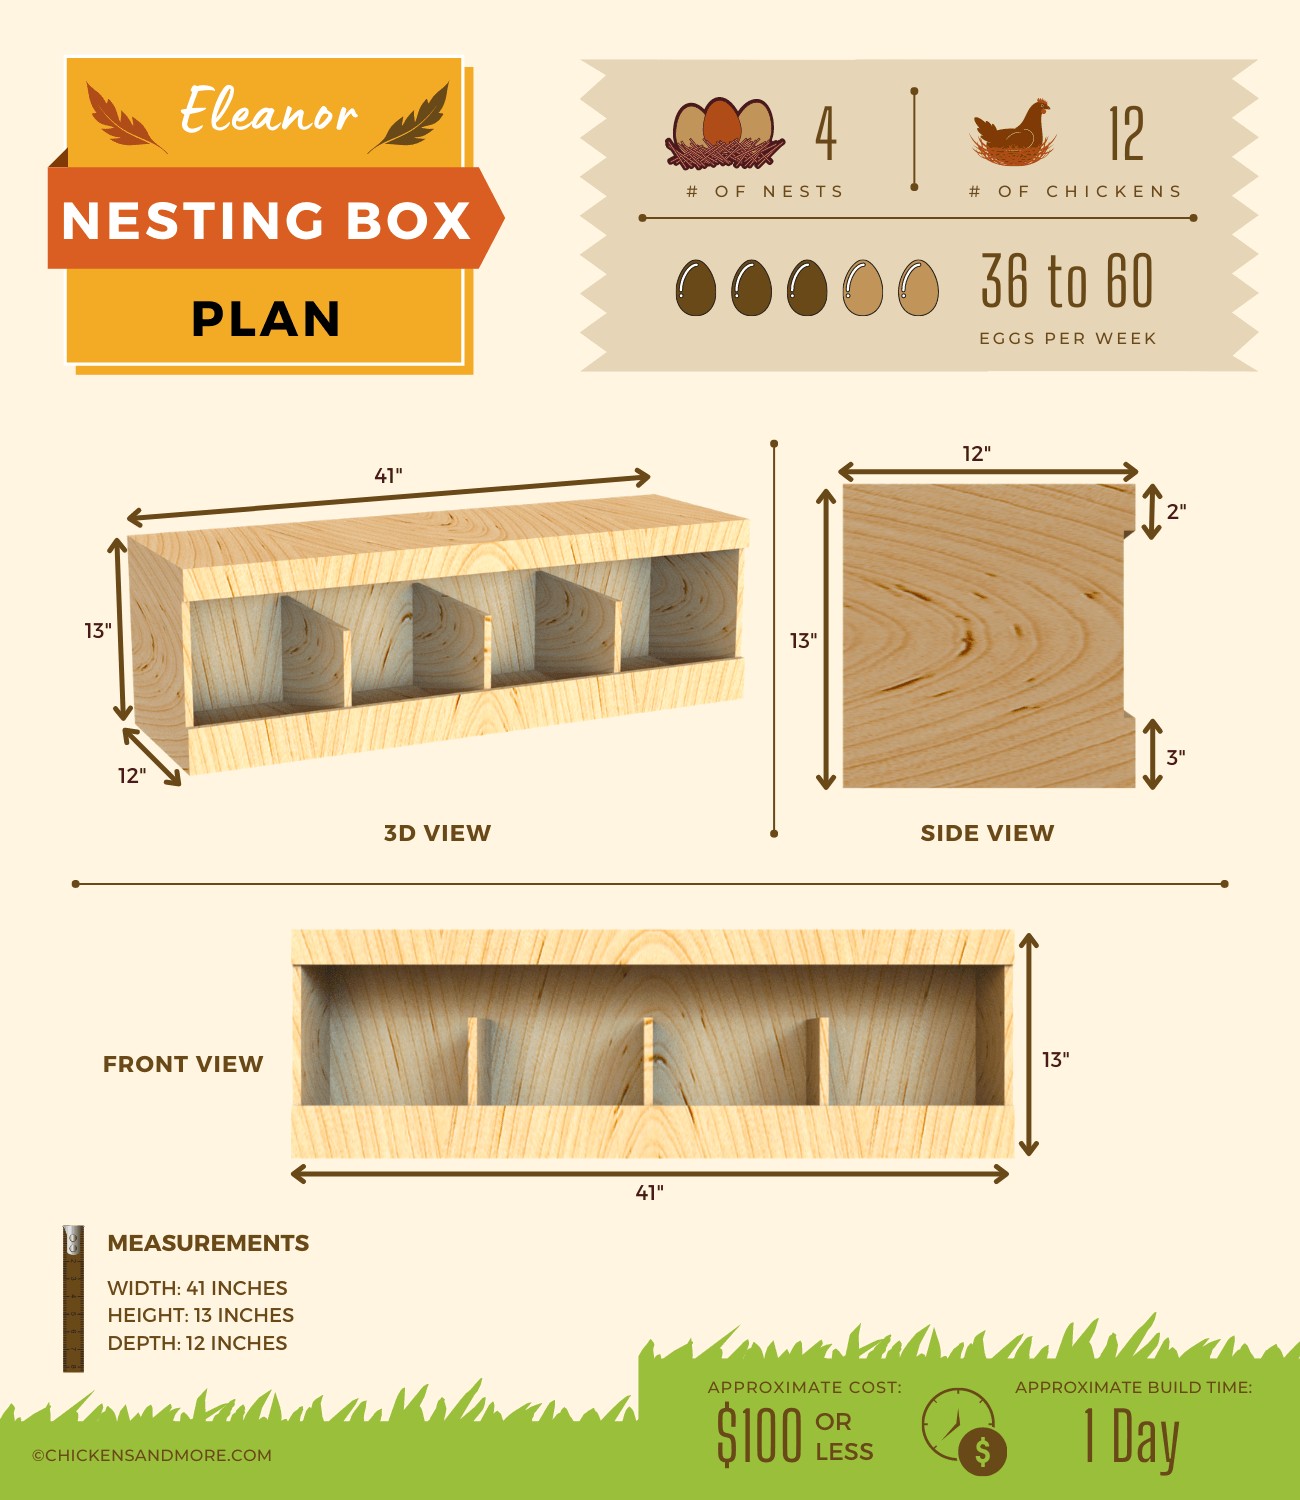 Build Nesting Boxes. Build Nesting Boxes картинки для детей. Nesting Box grass. Nesting box